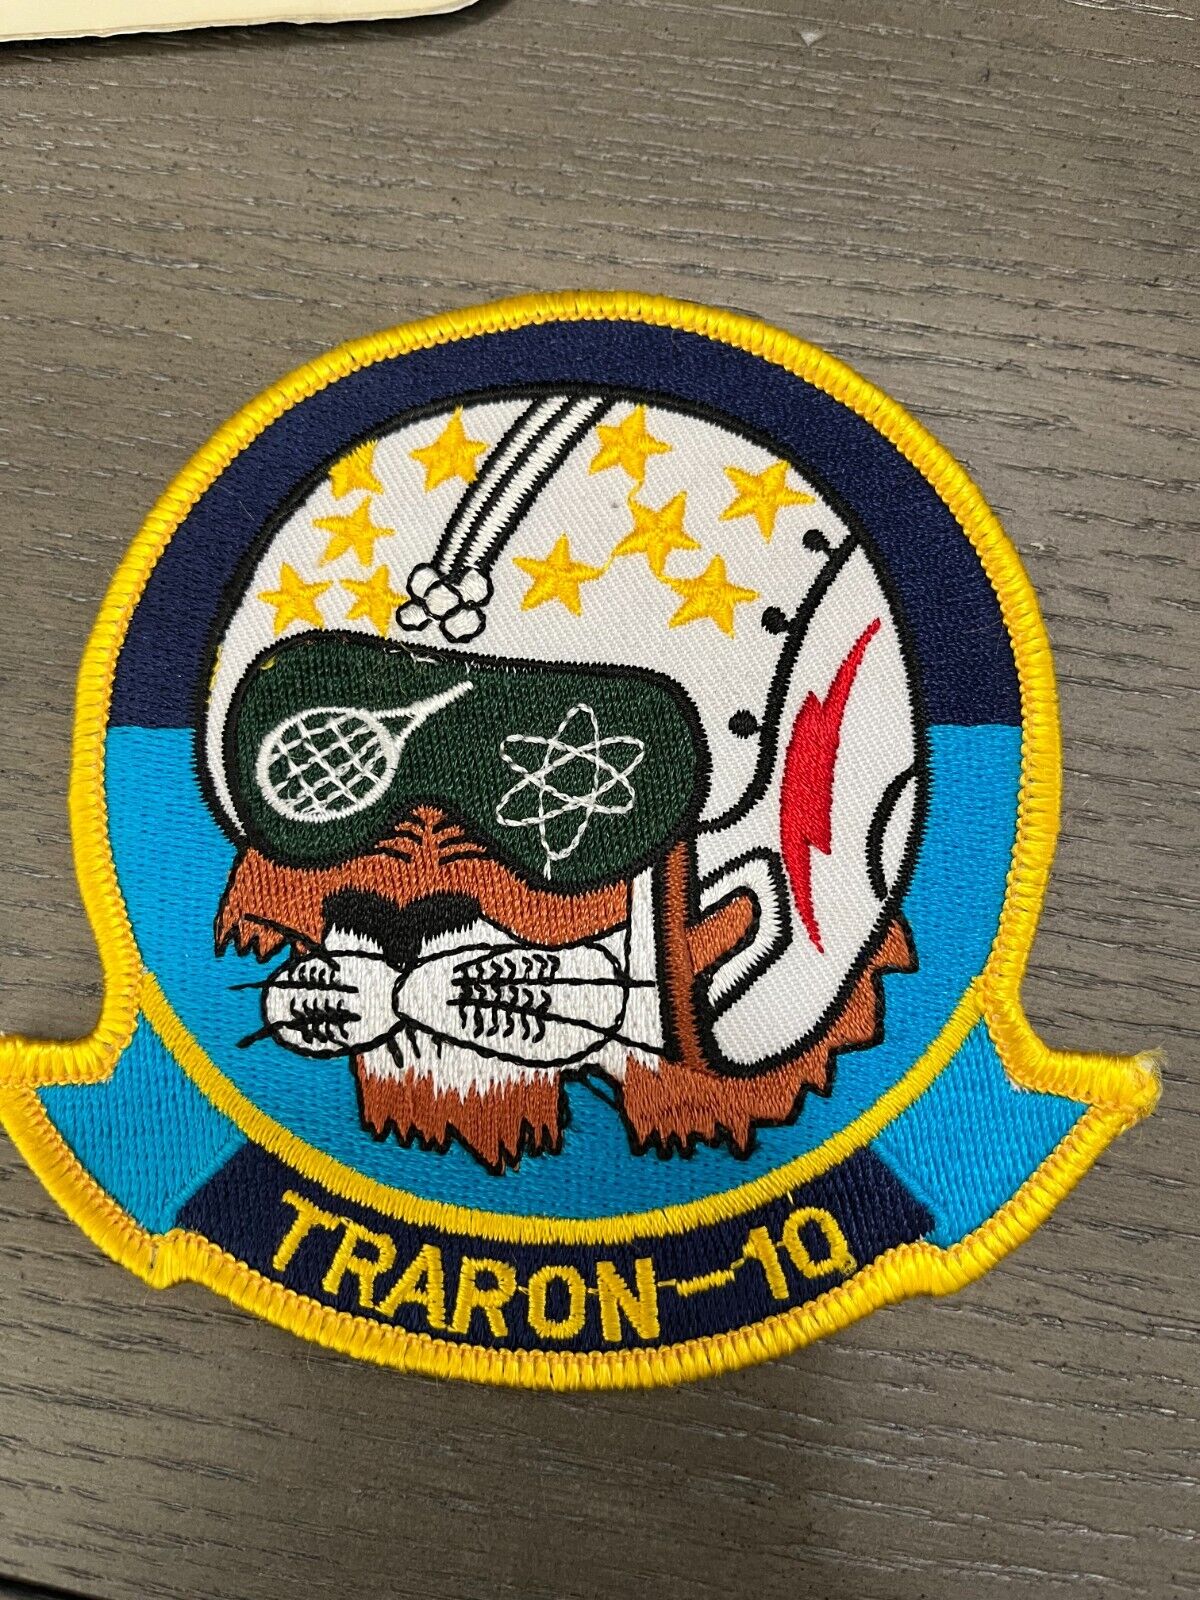 U.S Navy TRARON-10 Squadron 4\'\' Patch